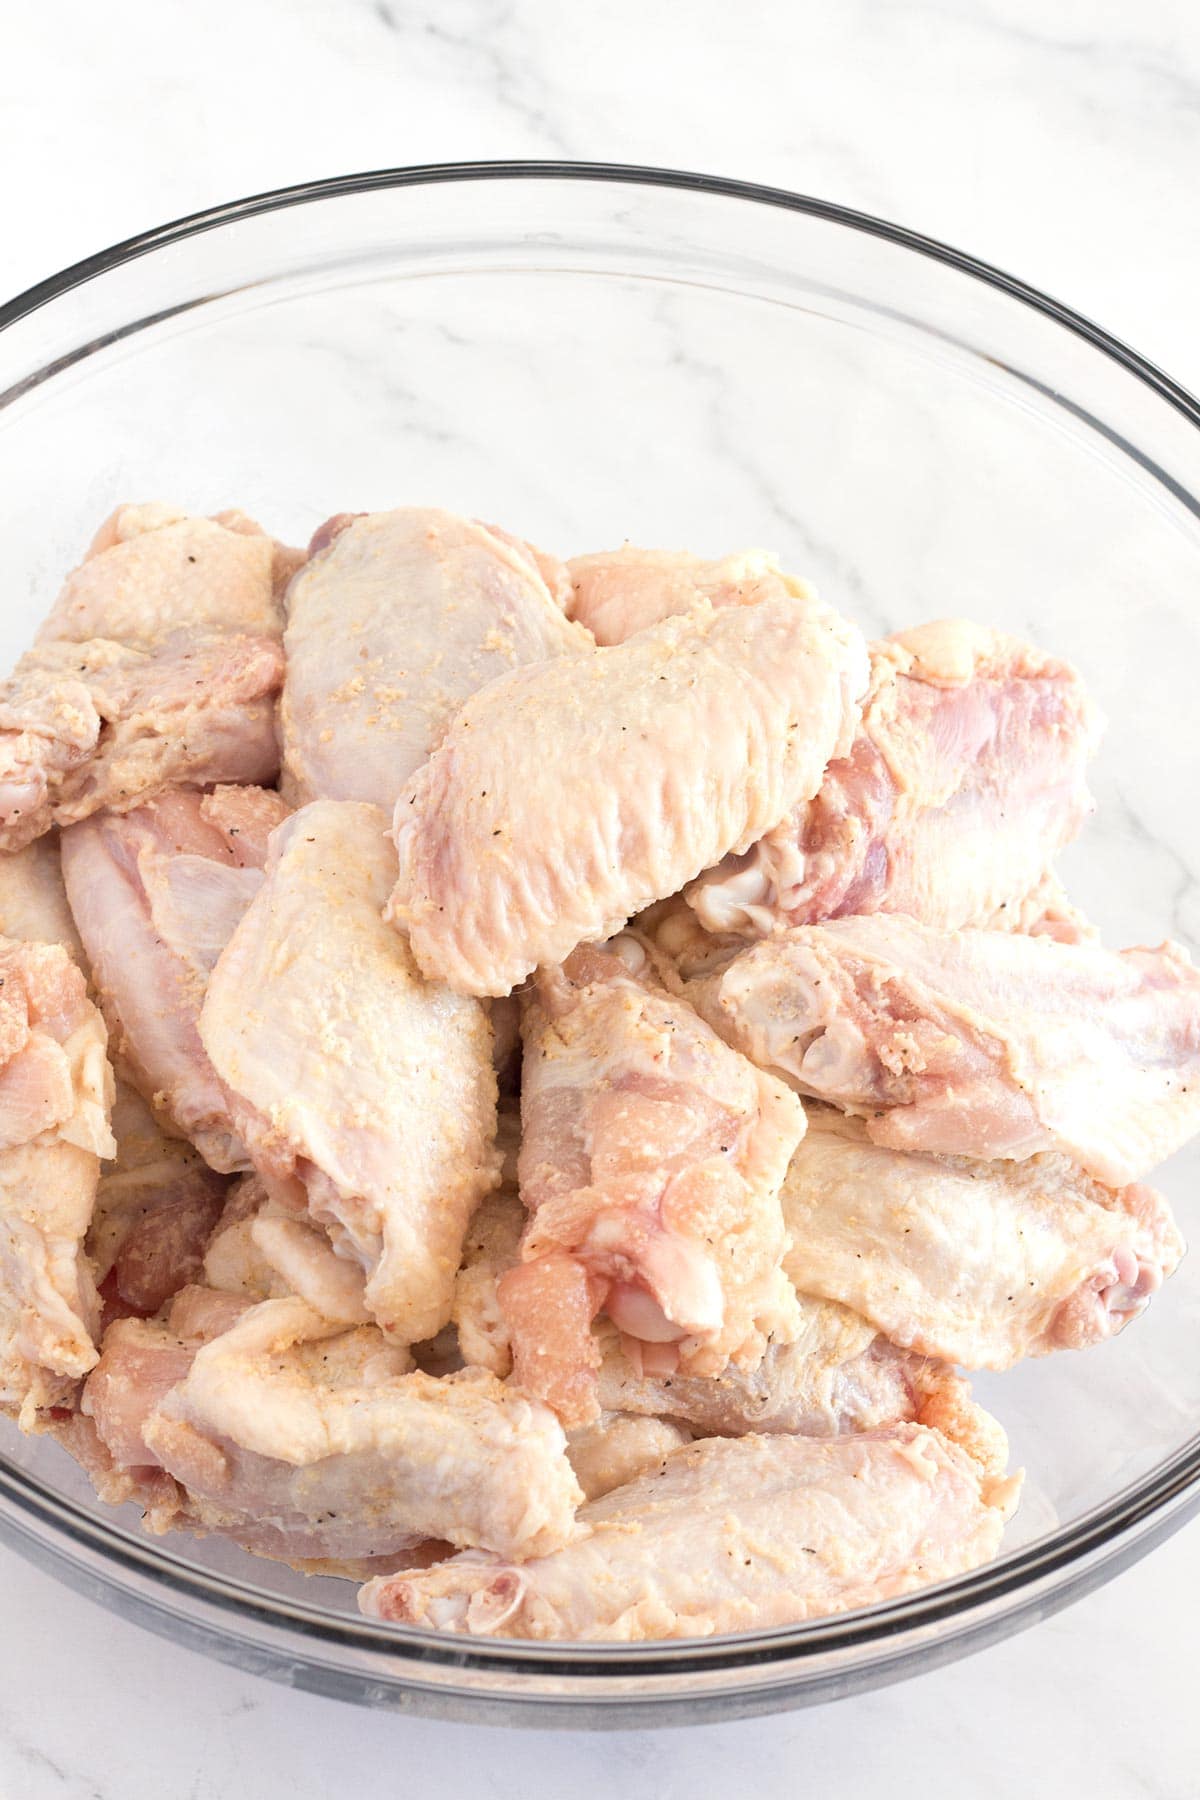 Baking soda and seasonings tossed on chicken wings.